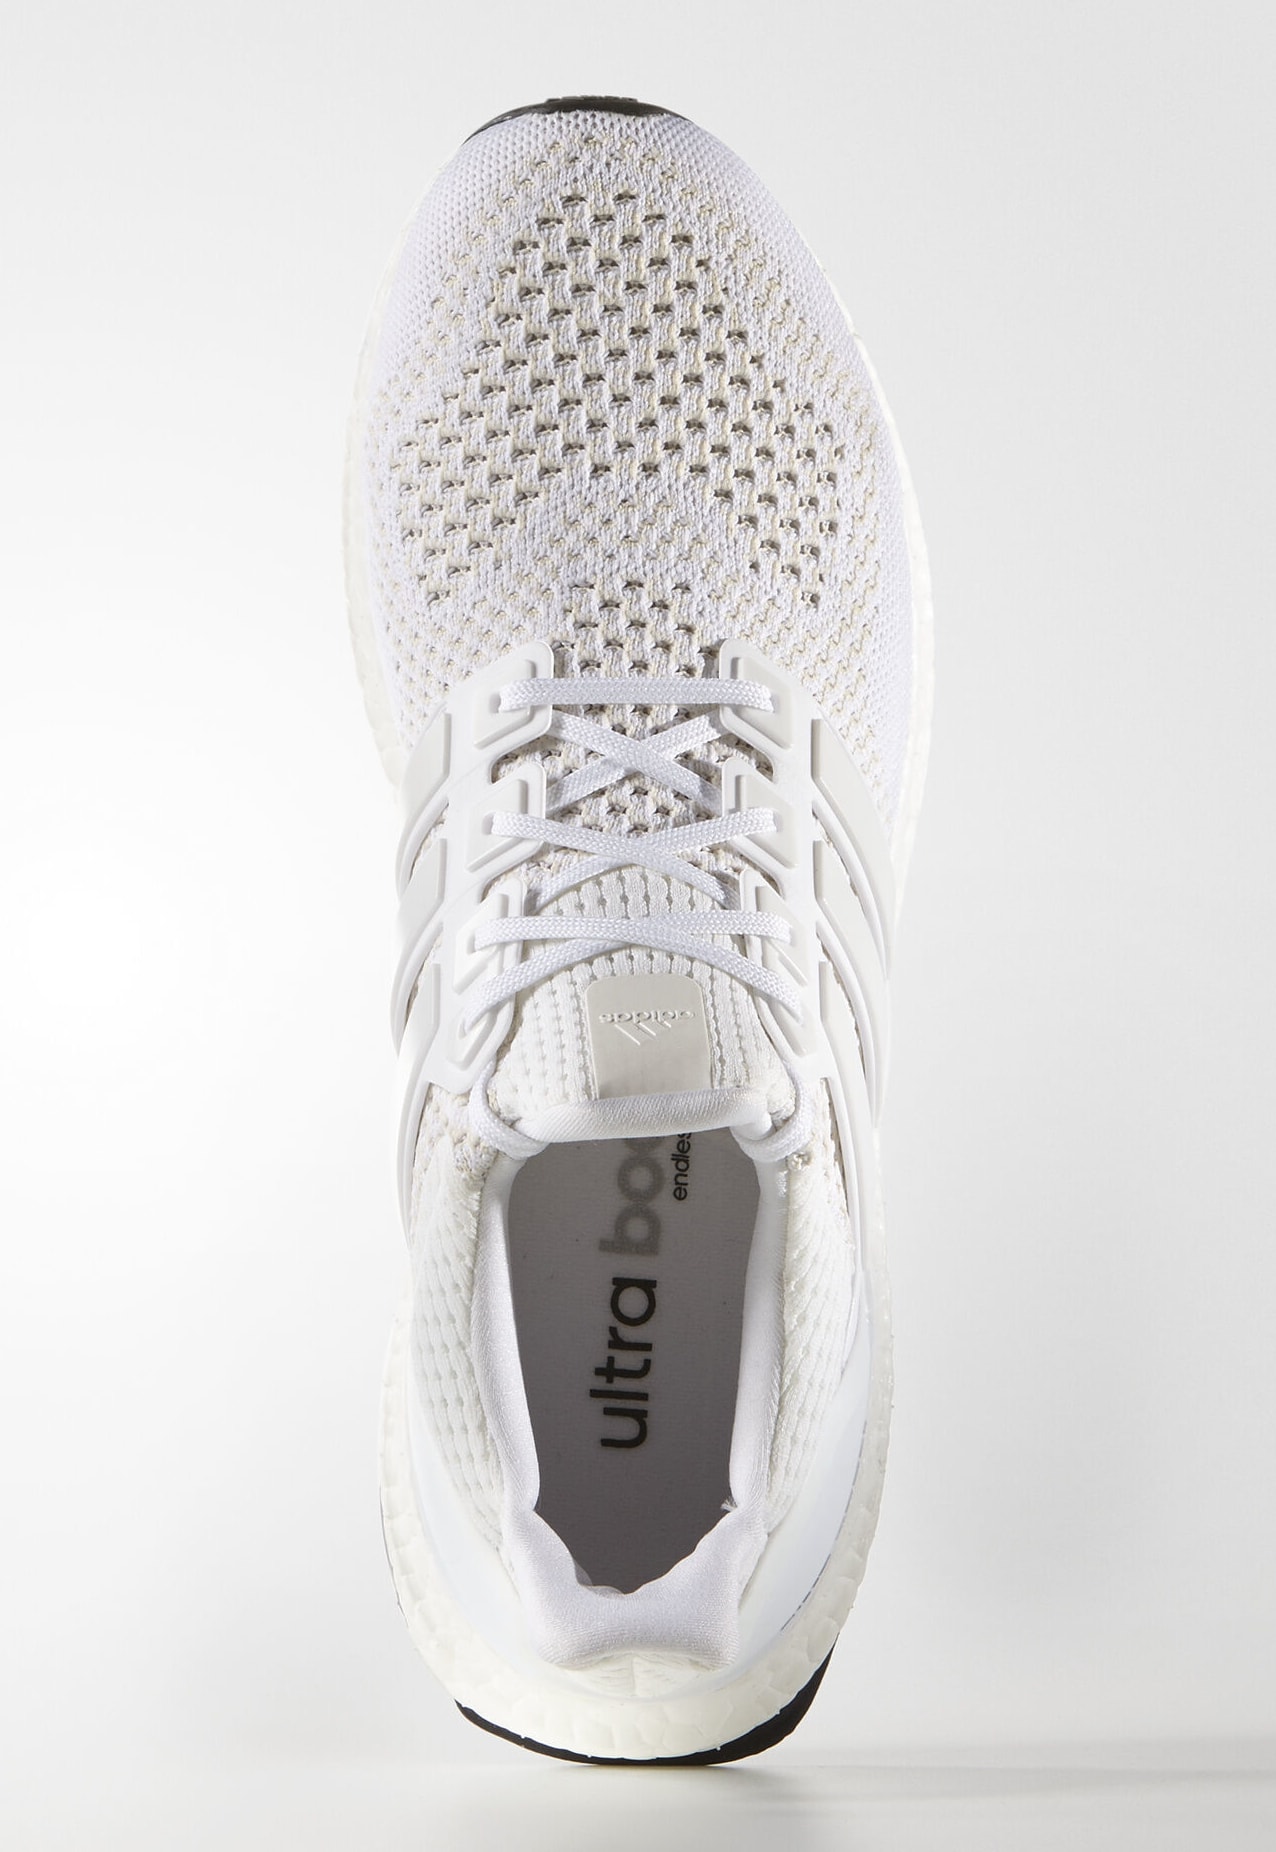 Adidas UltraBoost 1.0 &quot;Triple-White&quot; Set To Restock: Details